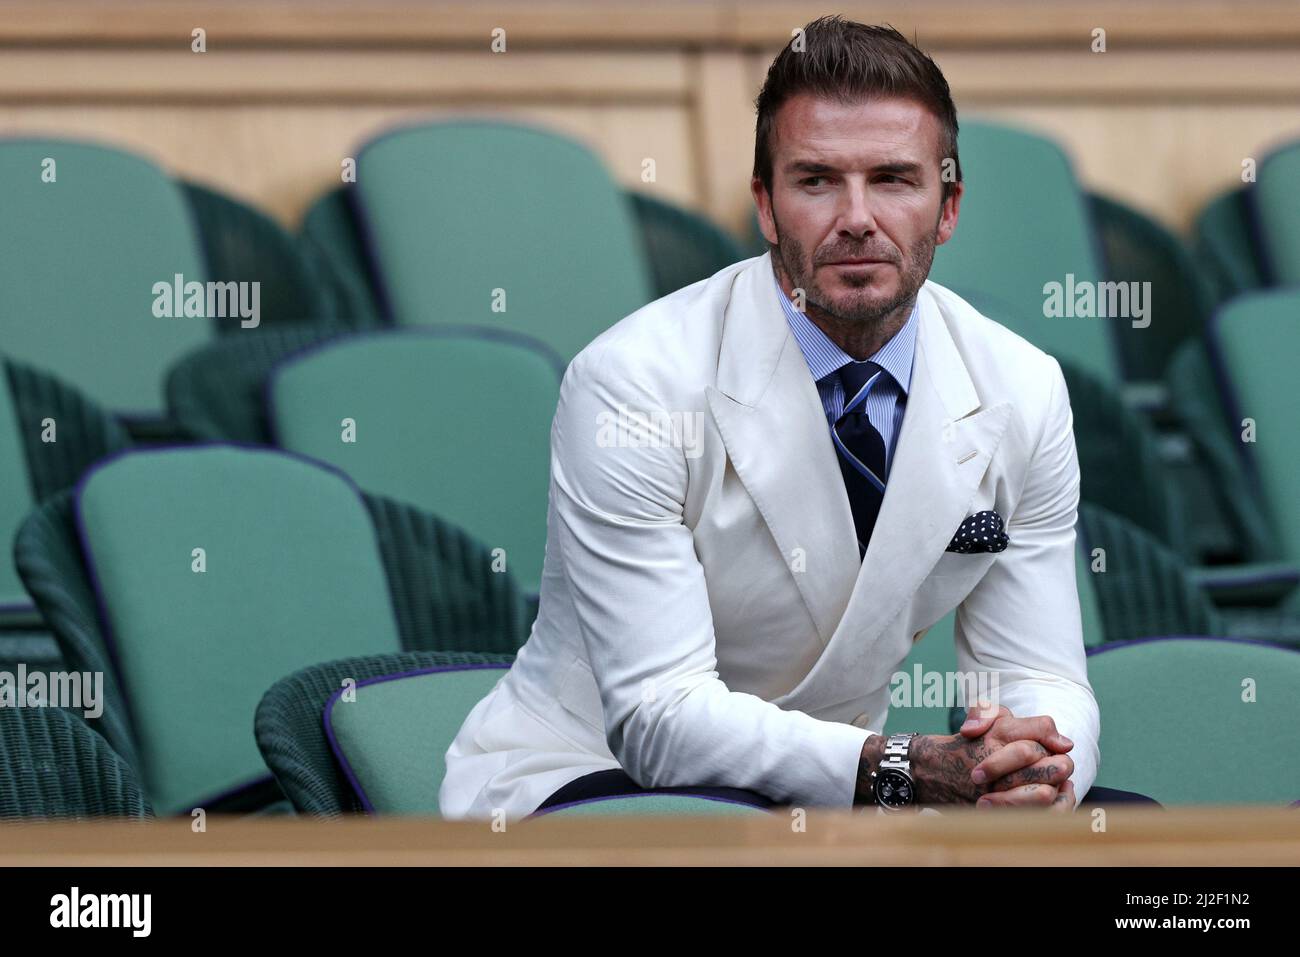 Former footballer David Beckham waits for a tennis match to start during Wimbledon tennis championships 9th July 2021. Stock Photo